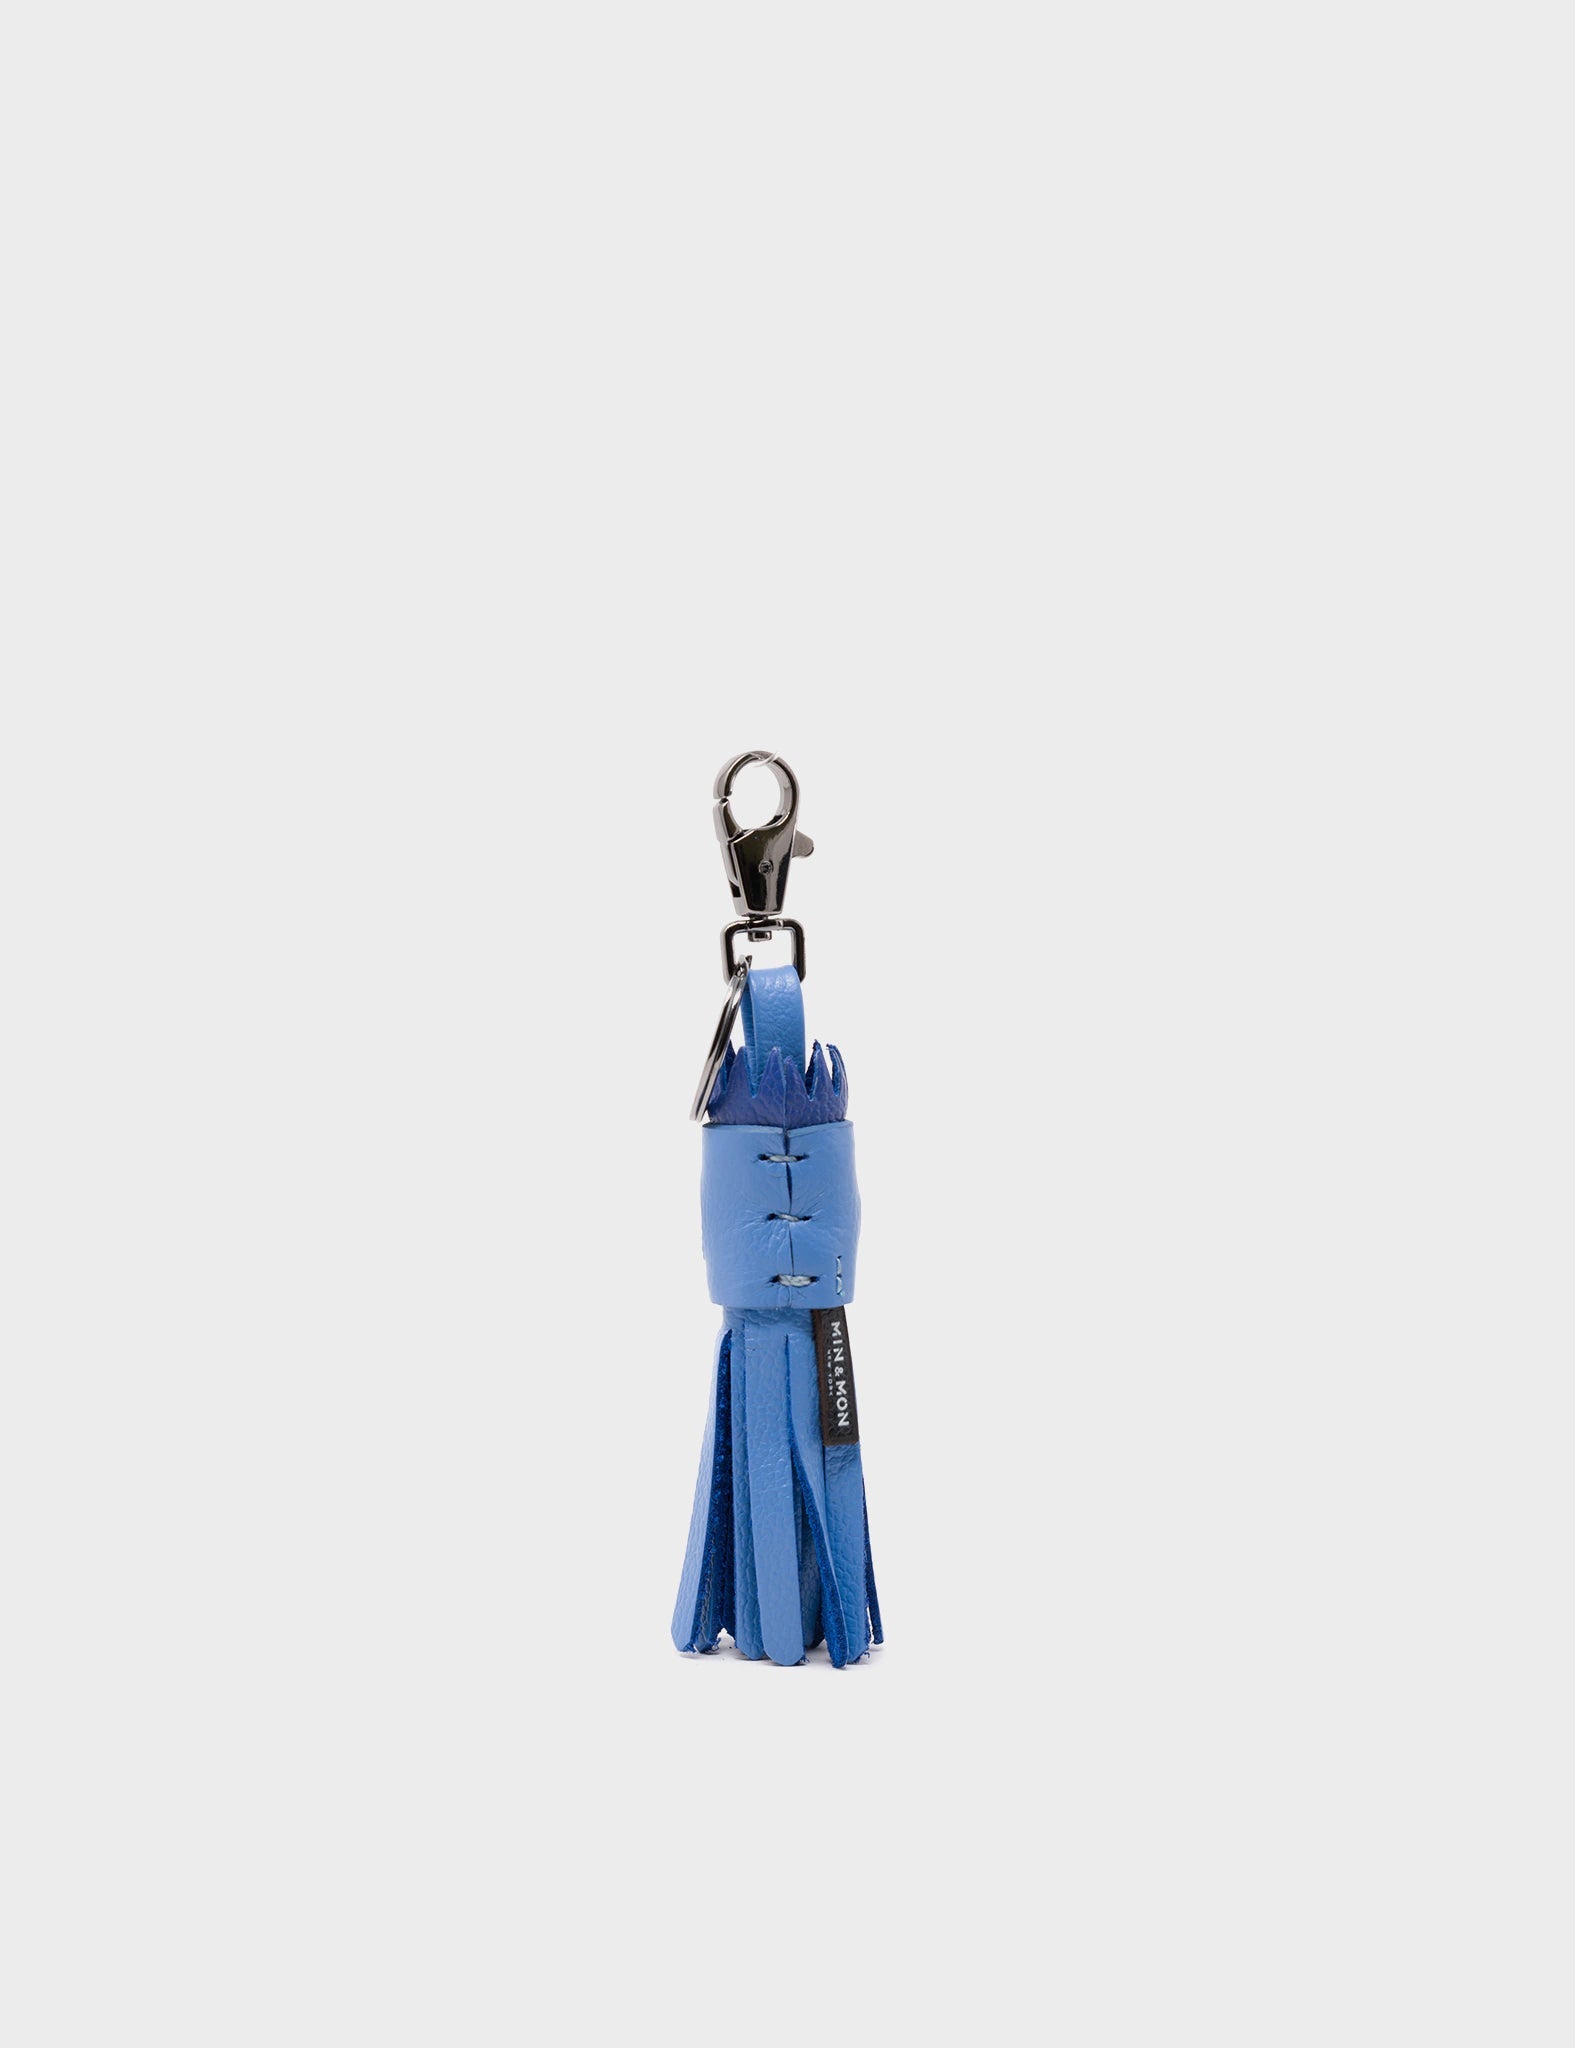 Queen Callie Marie Calamar Charm - Vista Blue Leather Keychain - Back